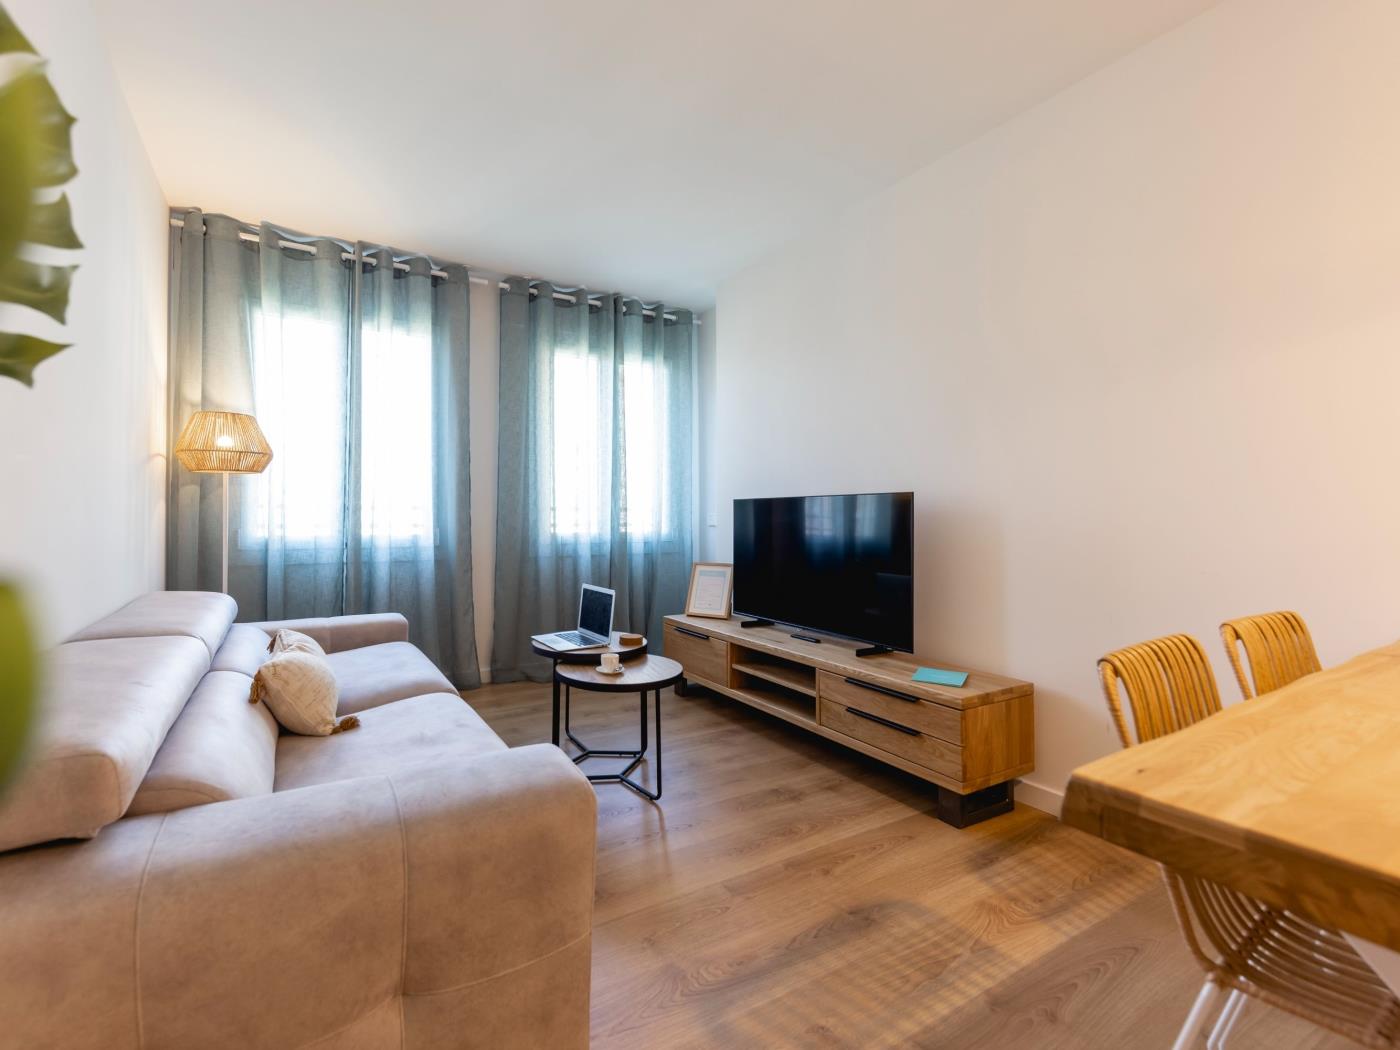 Bravissimo Tarlà, apartament de 2 habitacions a Girona